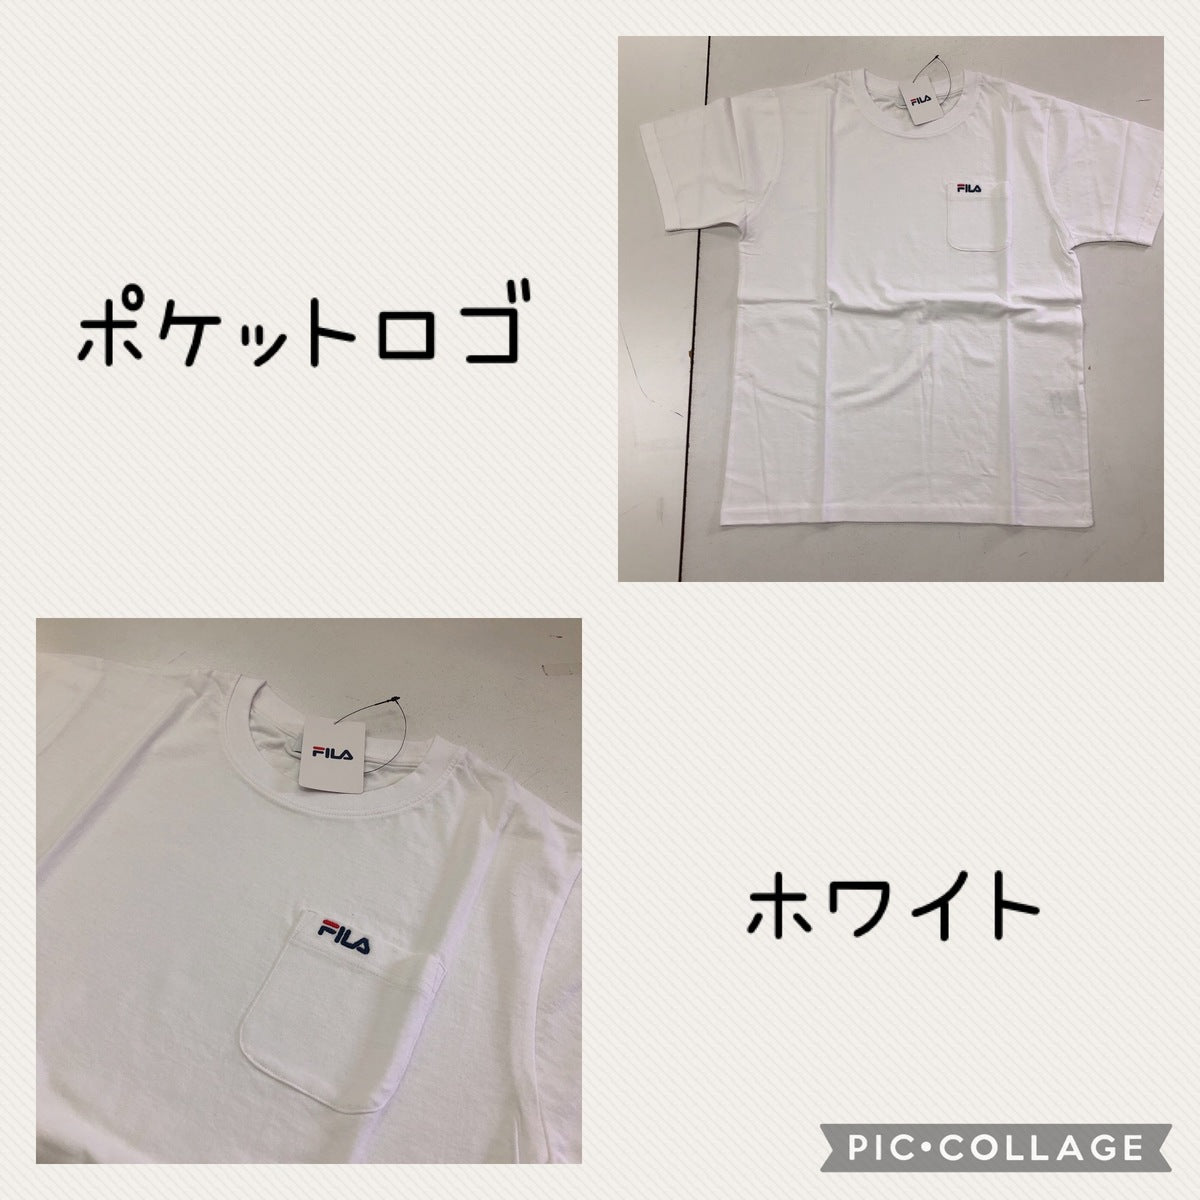 【FILA】 Tシャツ Mサイズ ネイビー ブラック